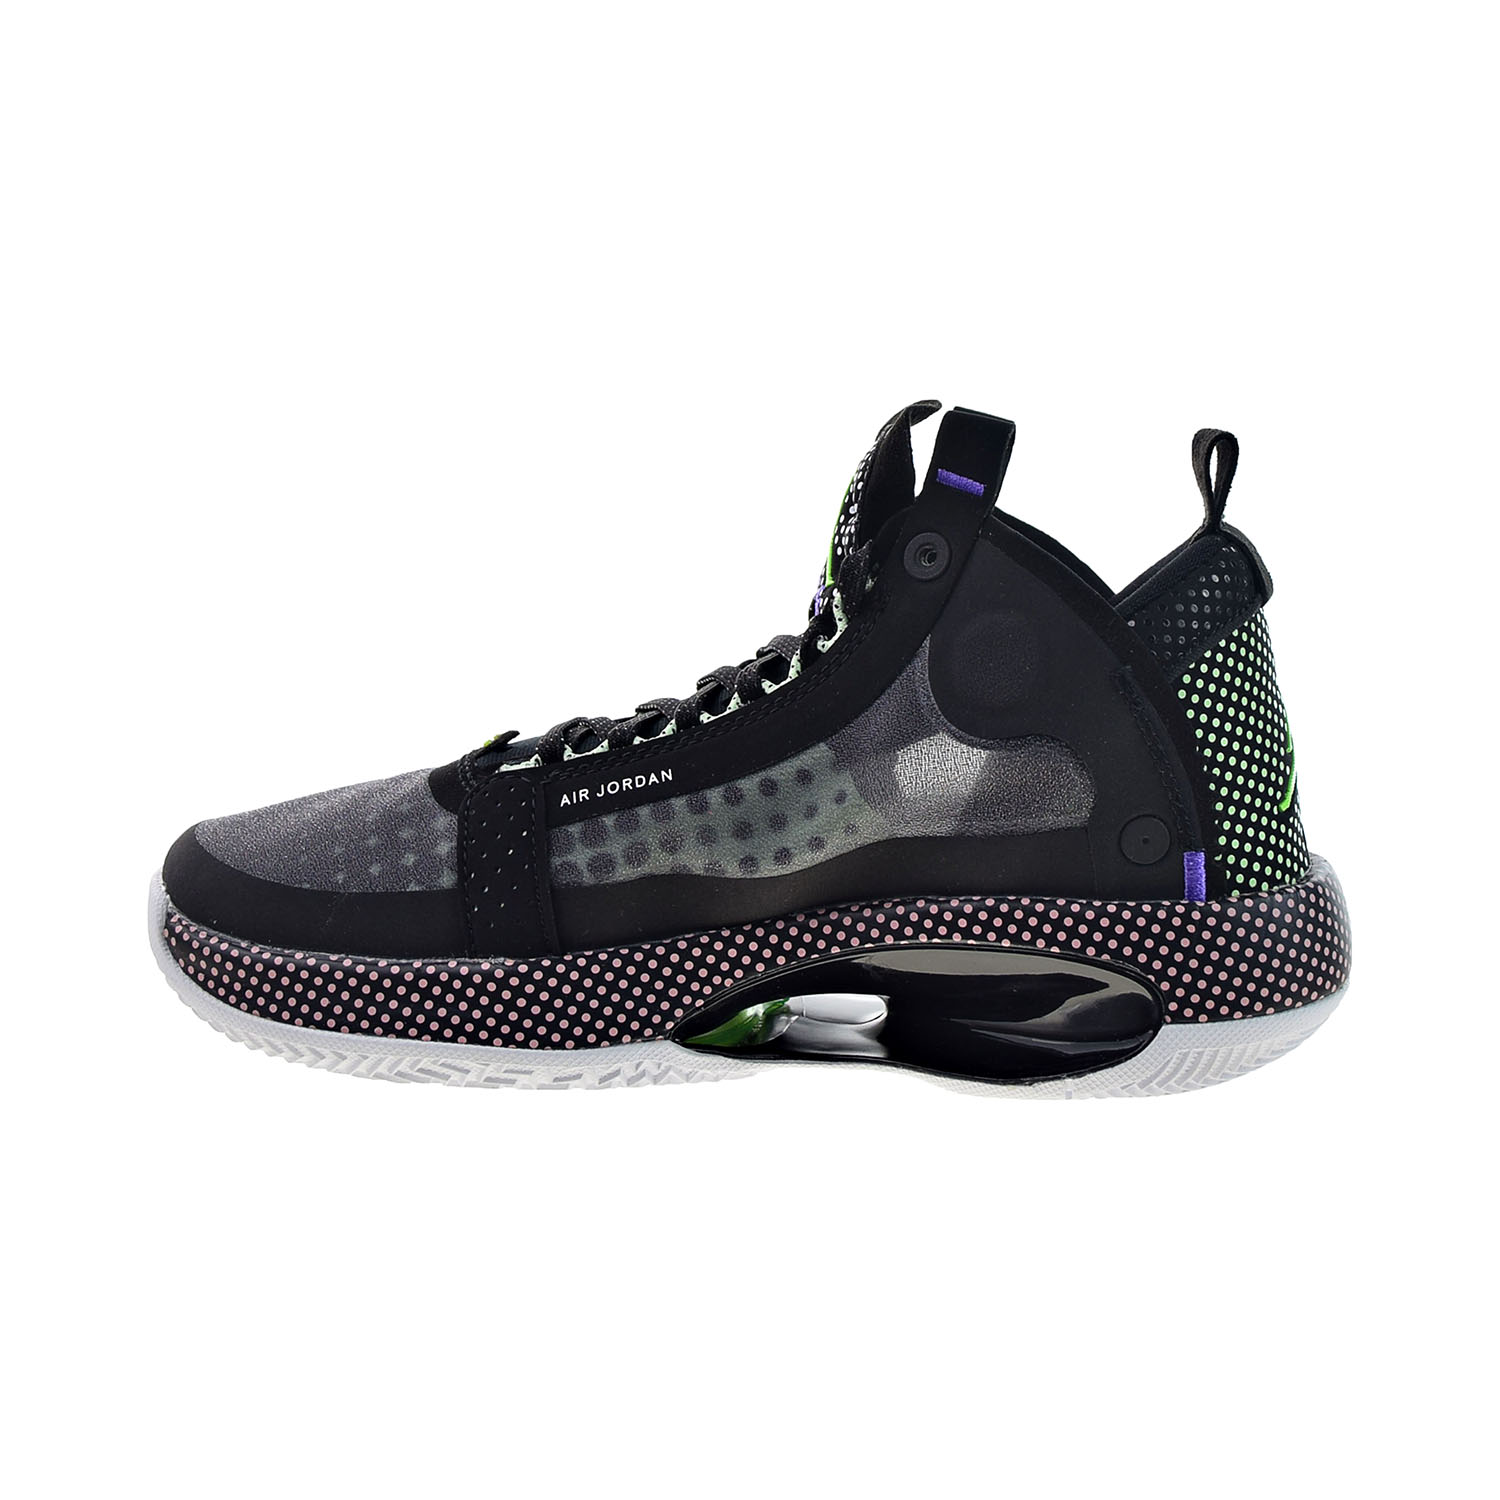 Air Jordan XXXIV 34 Big Kids' Basketball Shoes Black-White-V Green bq3384-013 - image 4 of 6